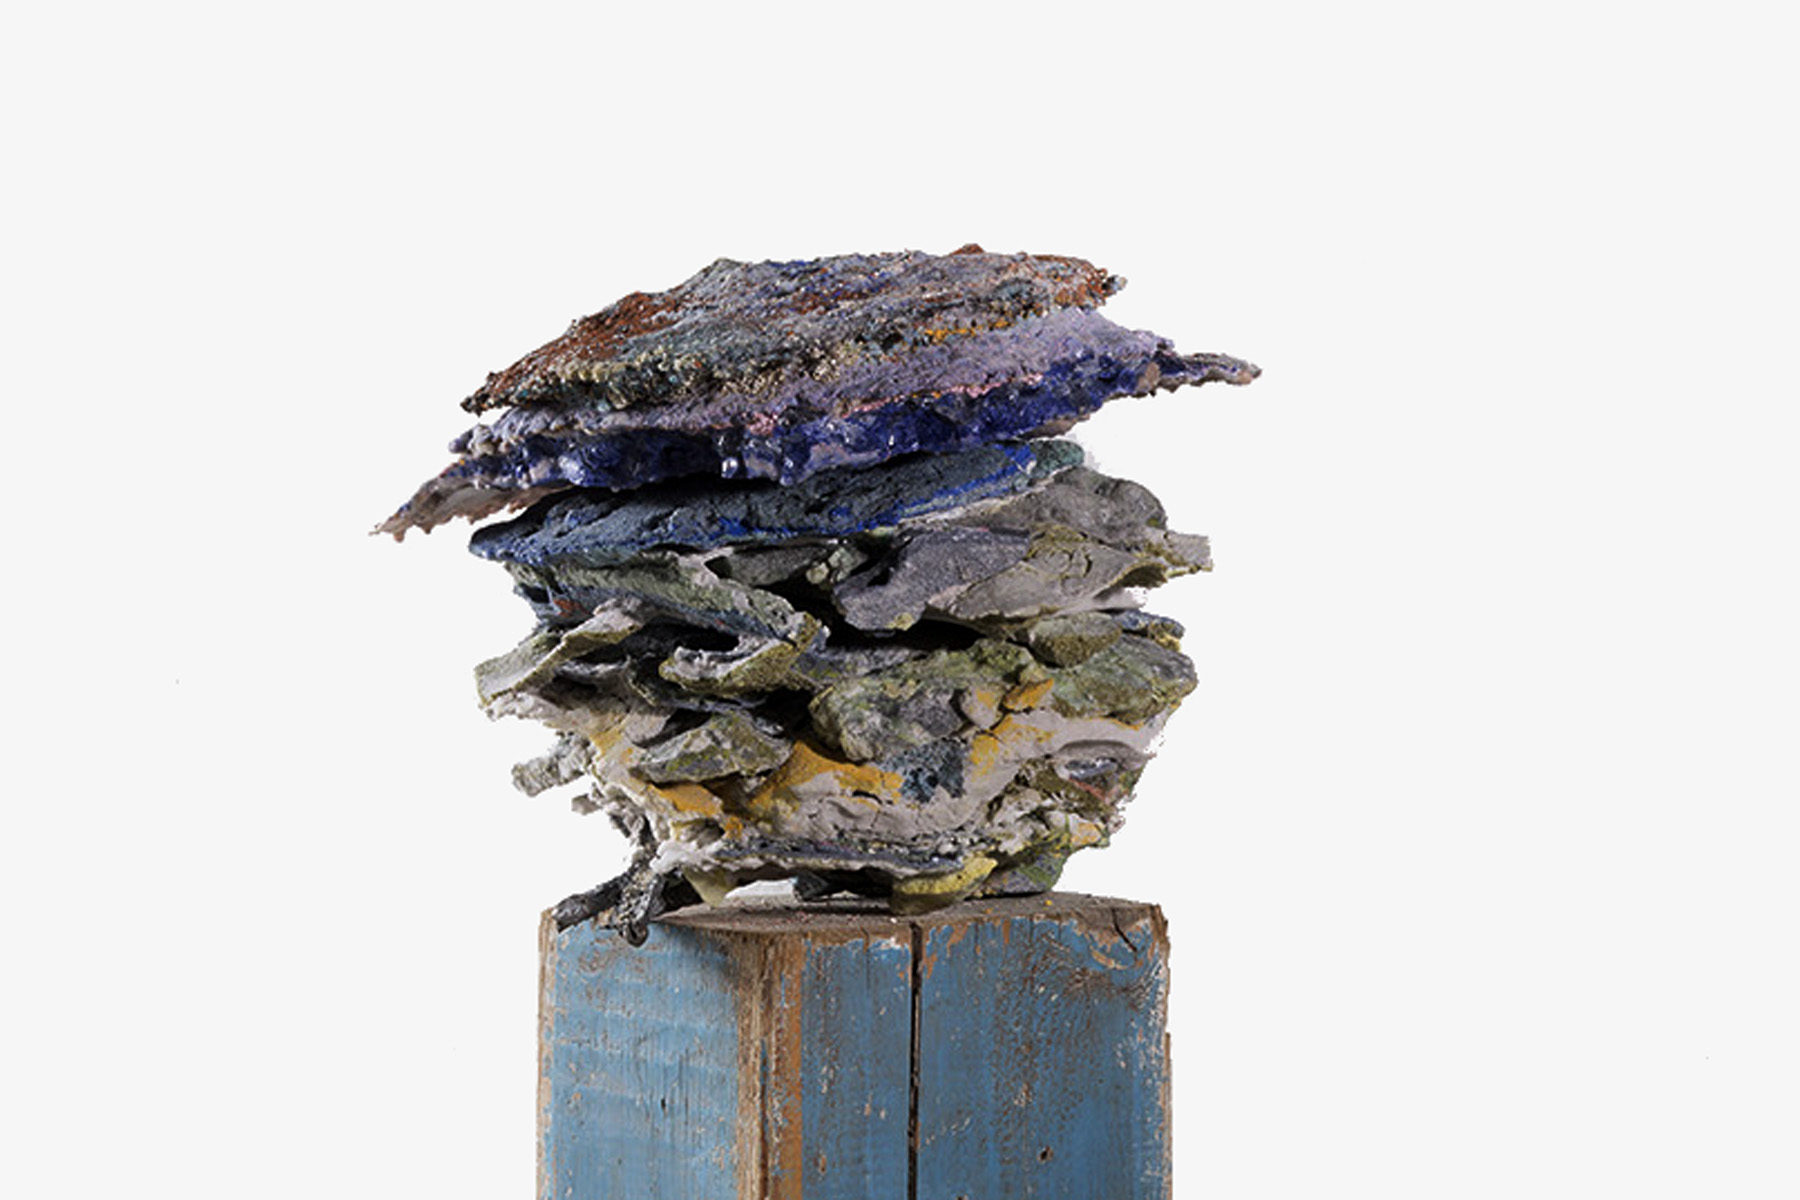 Alberto Scodro, Untitled Glasssand (Owl), 2015, sand, glass, pigments, oxids, epoxy resin, 35 x 45 x 3 cm